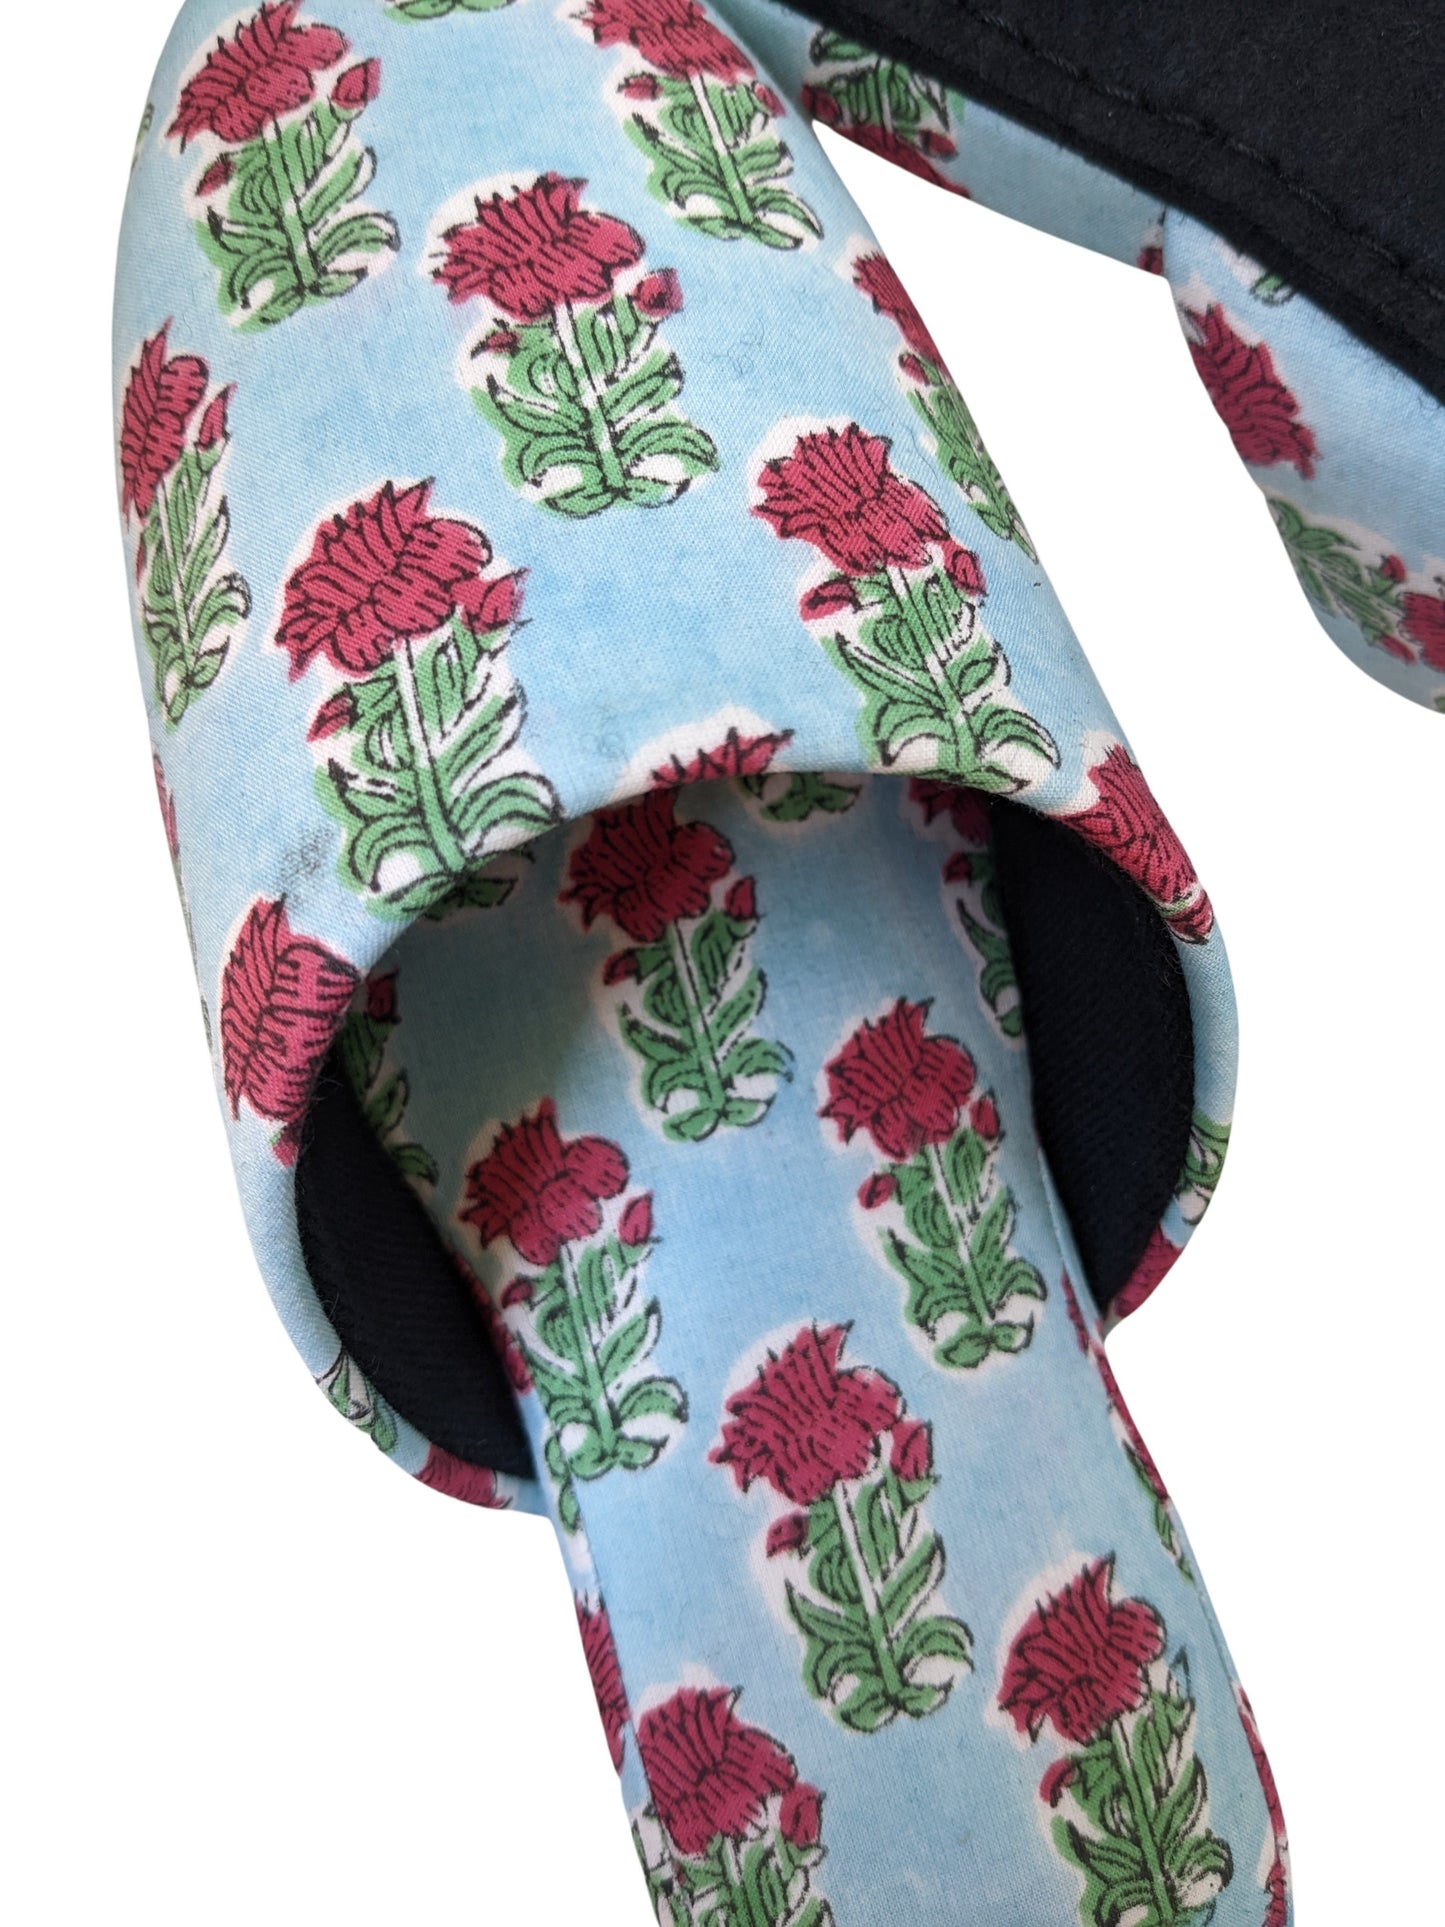 Medium Block Printing Flowers Mix Slippers [Black wool felt soles] MF2209 [Size Medium]